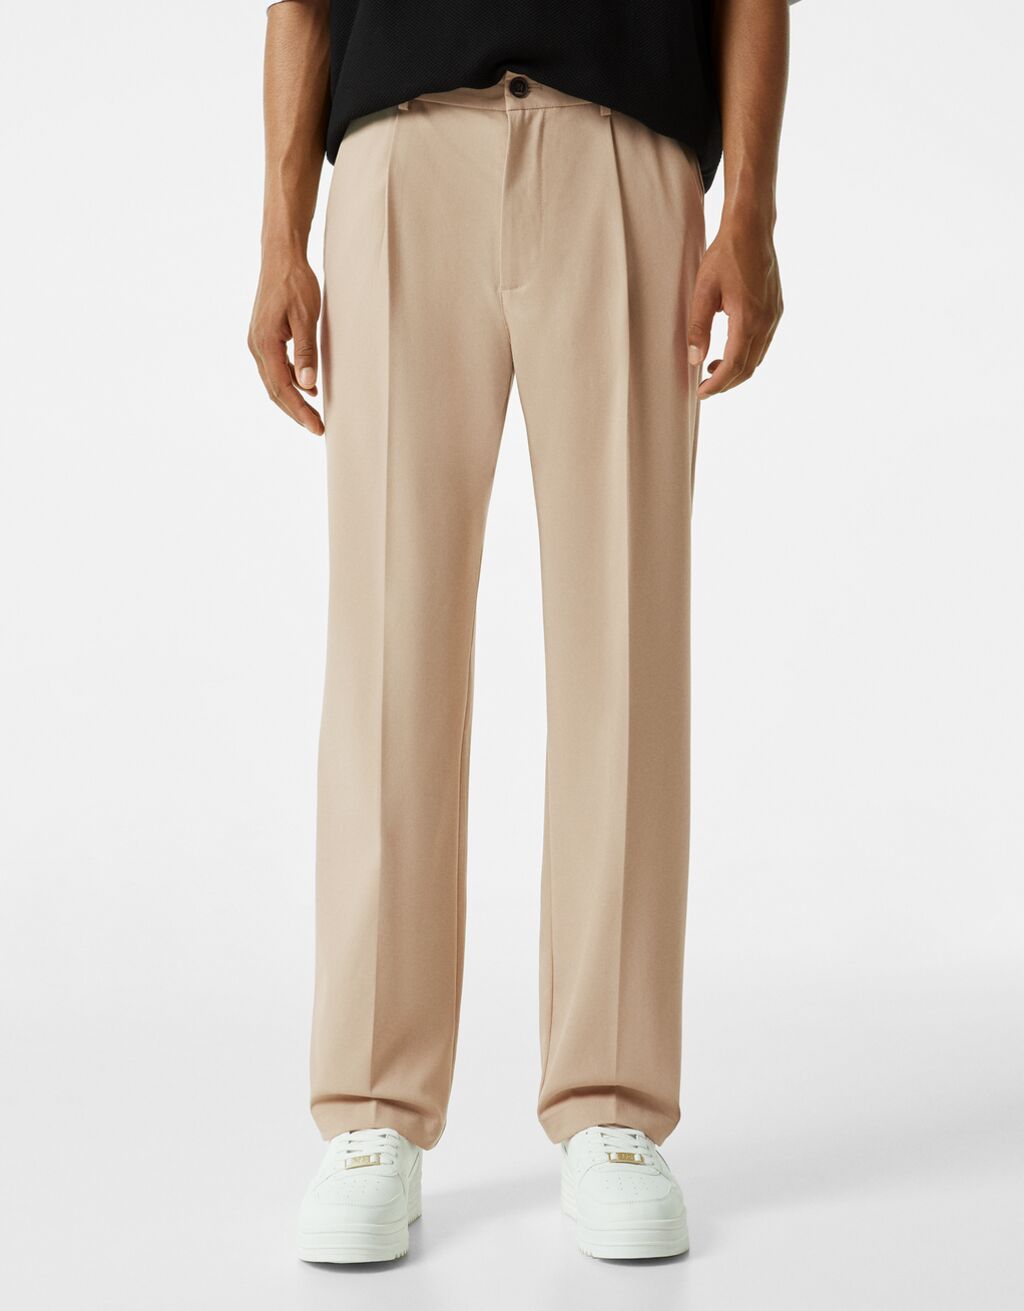 Tailored wide-leg sweatpants-style pants